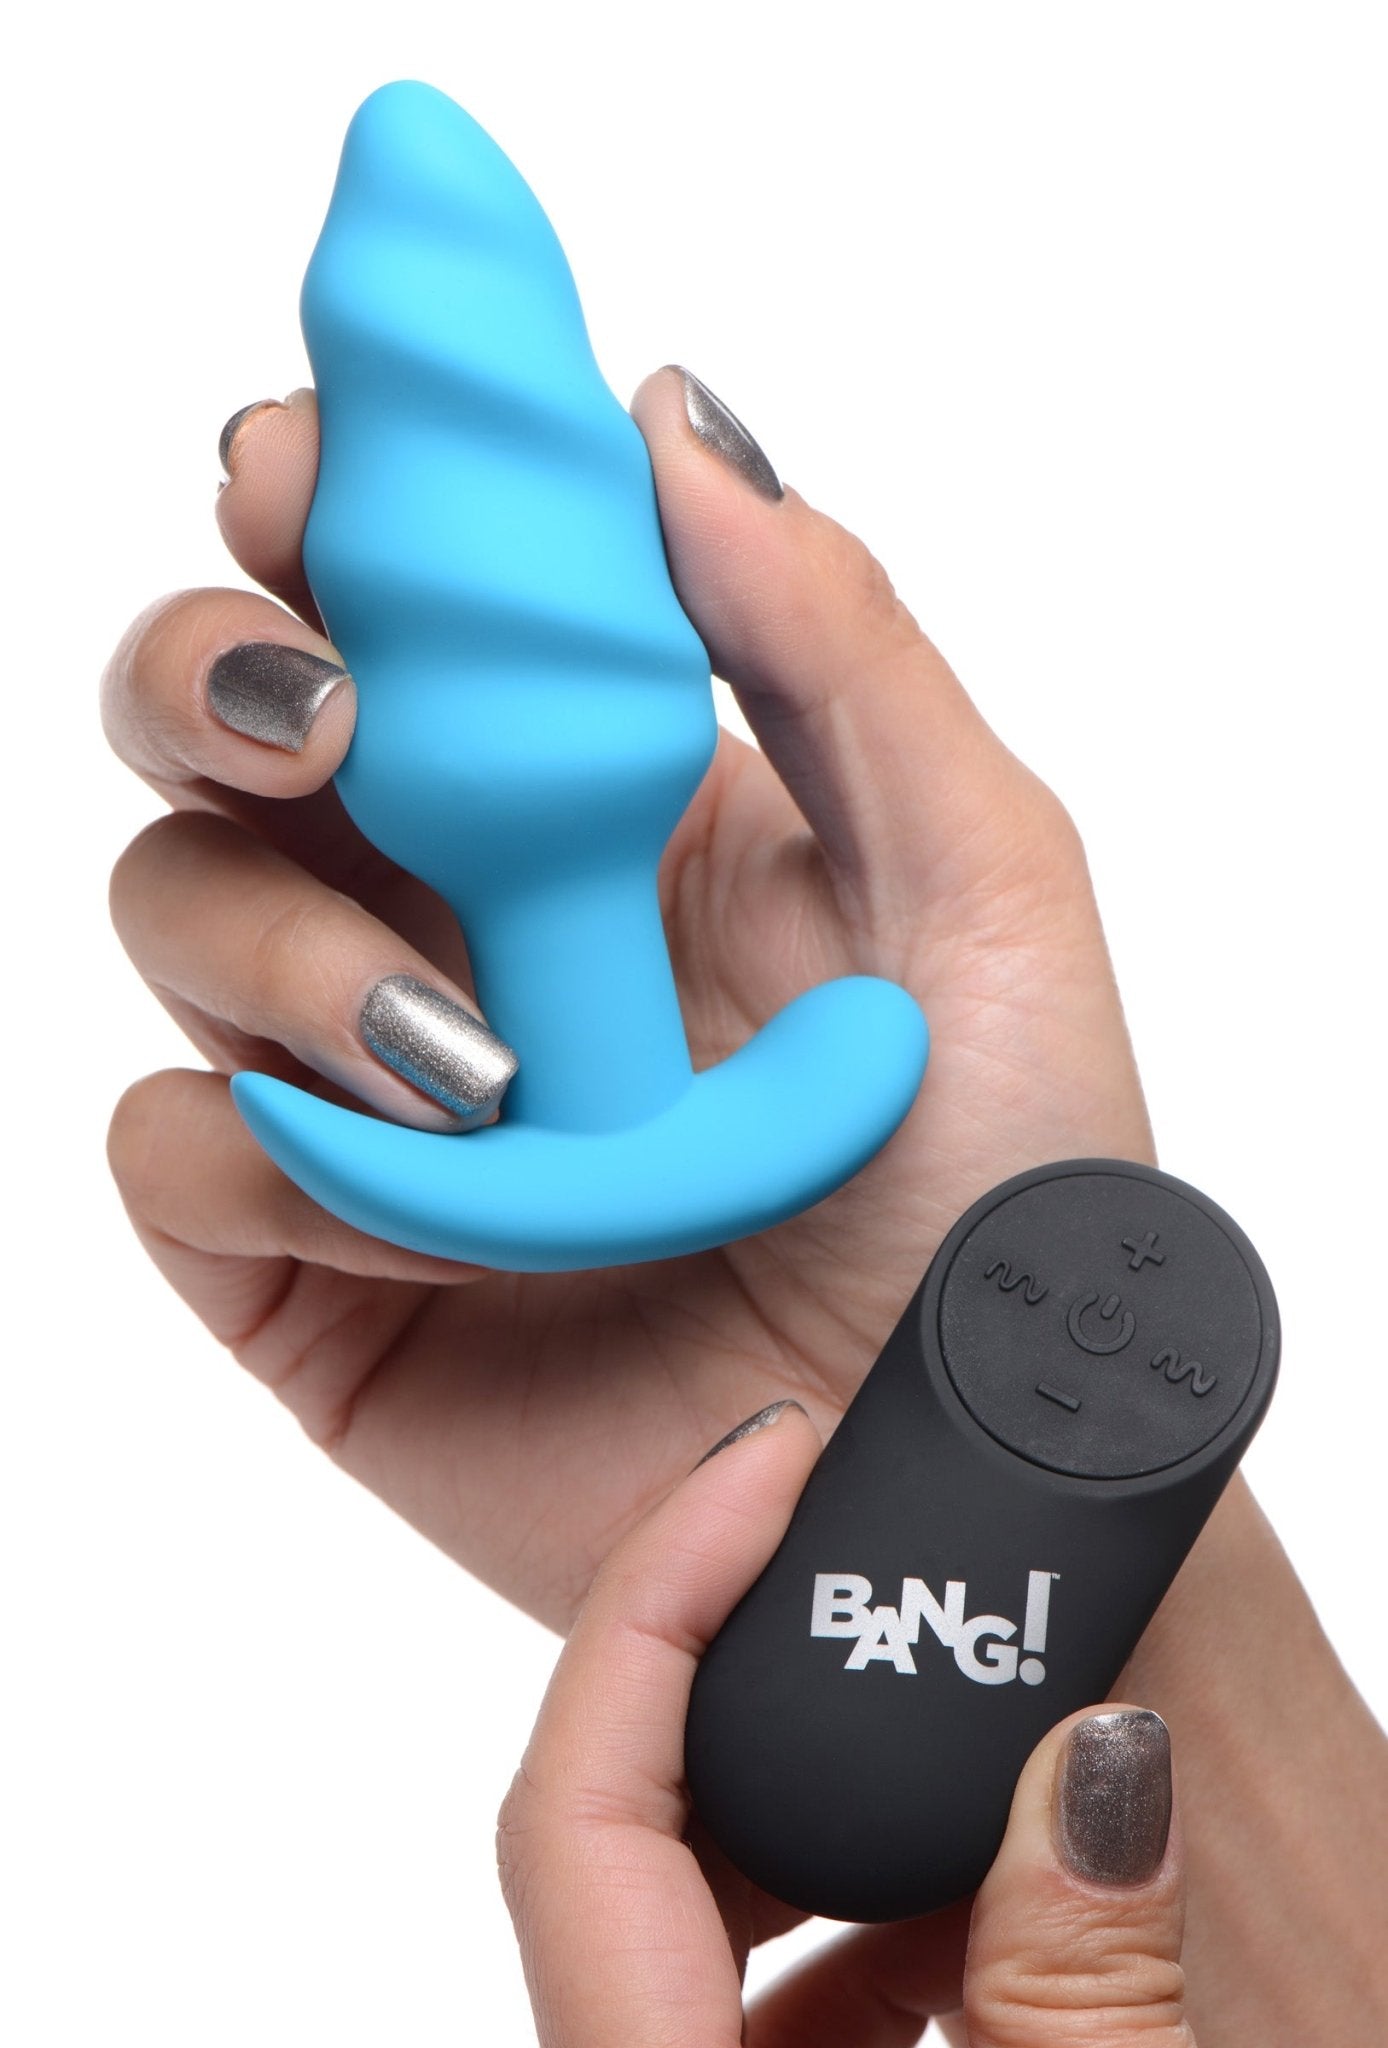 Bang! 21x Vibrating Silicone Swirl Butt Plug W/ Remote